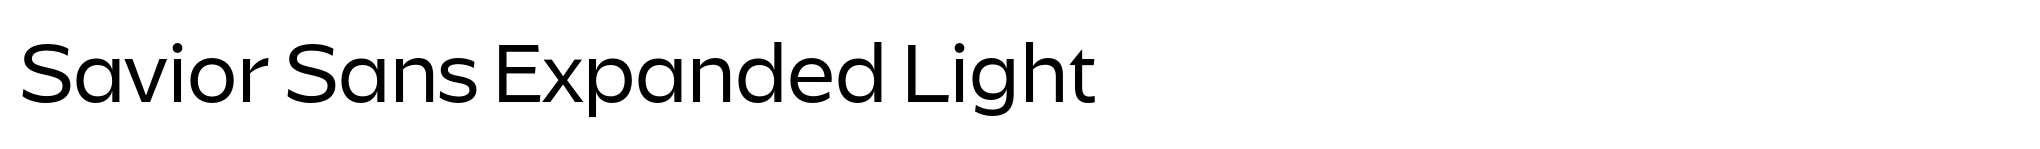 Savior Sans Expanded Light image